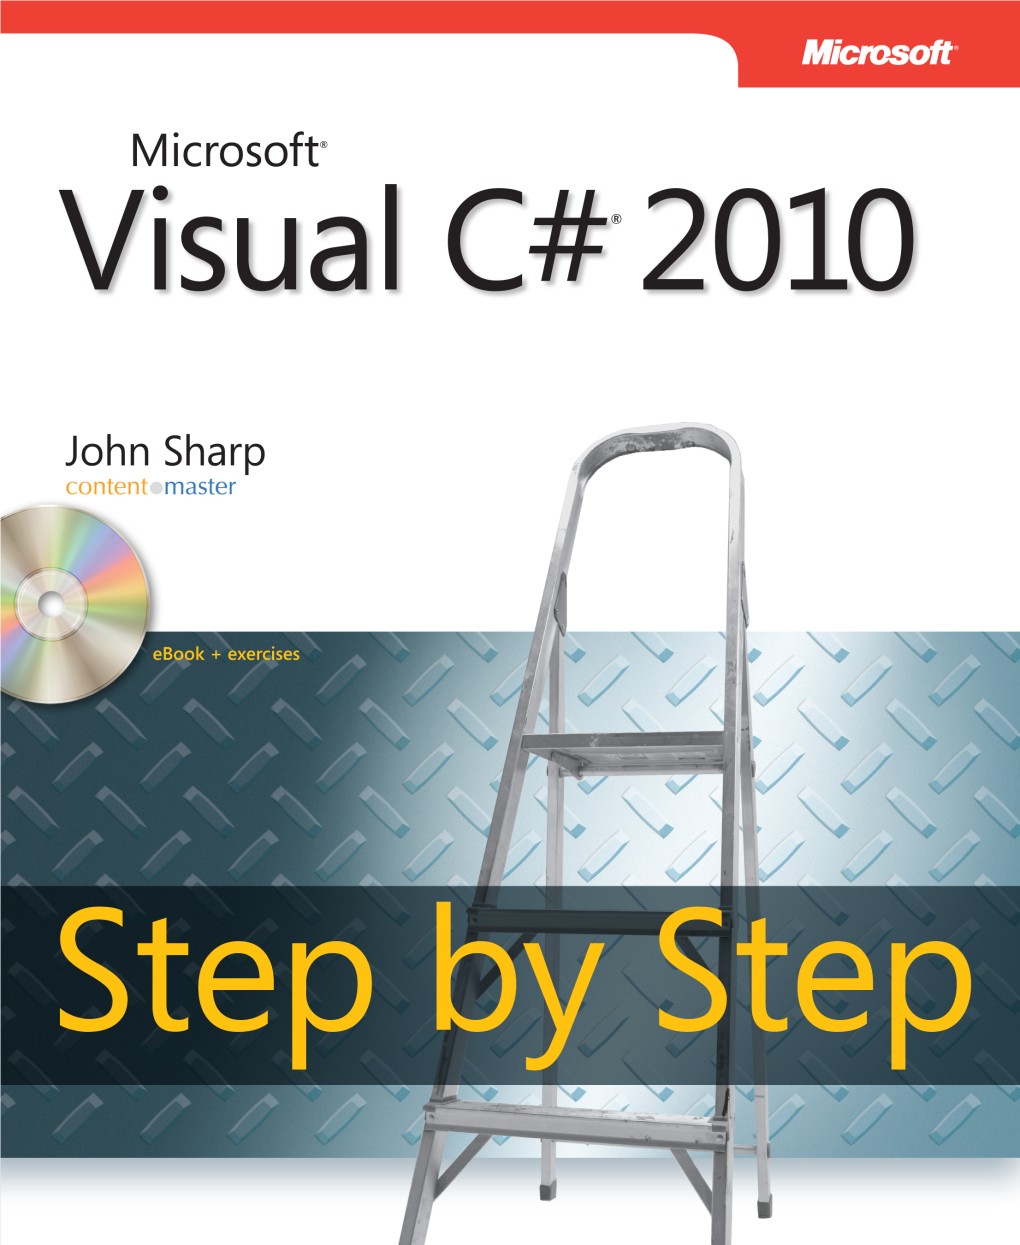 Microsoft Visual C# 2010 Step by Step Ebook